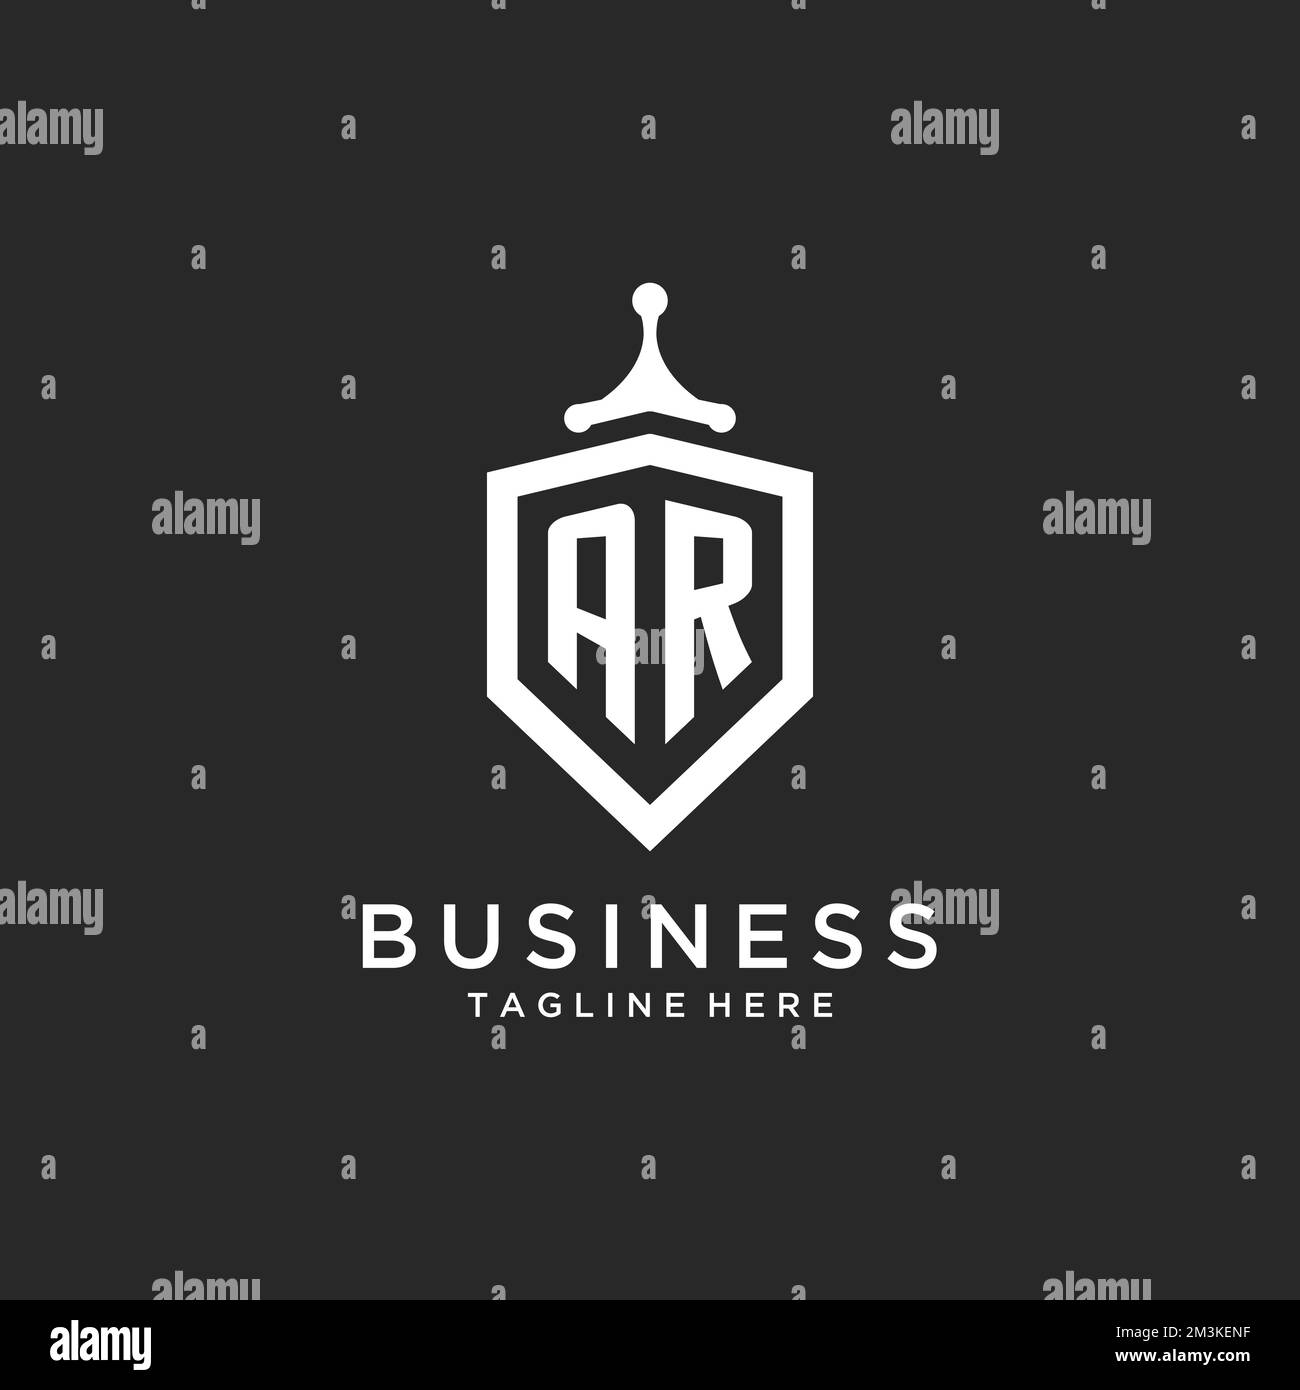 AR monogram logo initial with shield guard shape design ideas Stock Vector